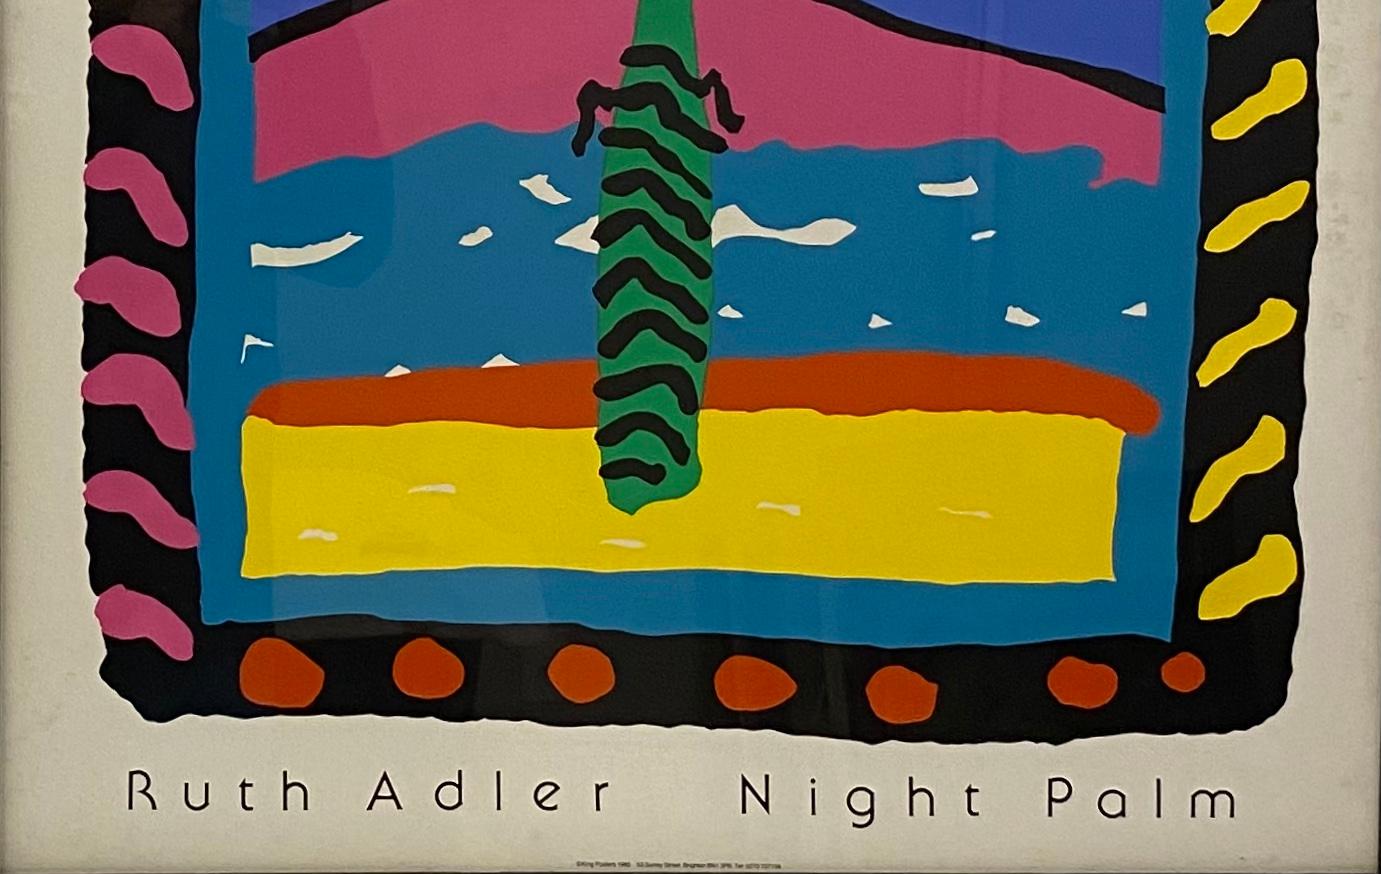 British Ruth Adler Night Palm Art Poster, Dated 1985